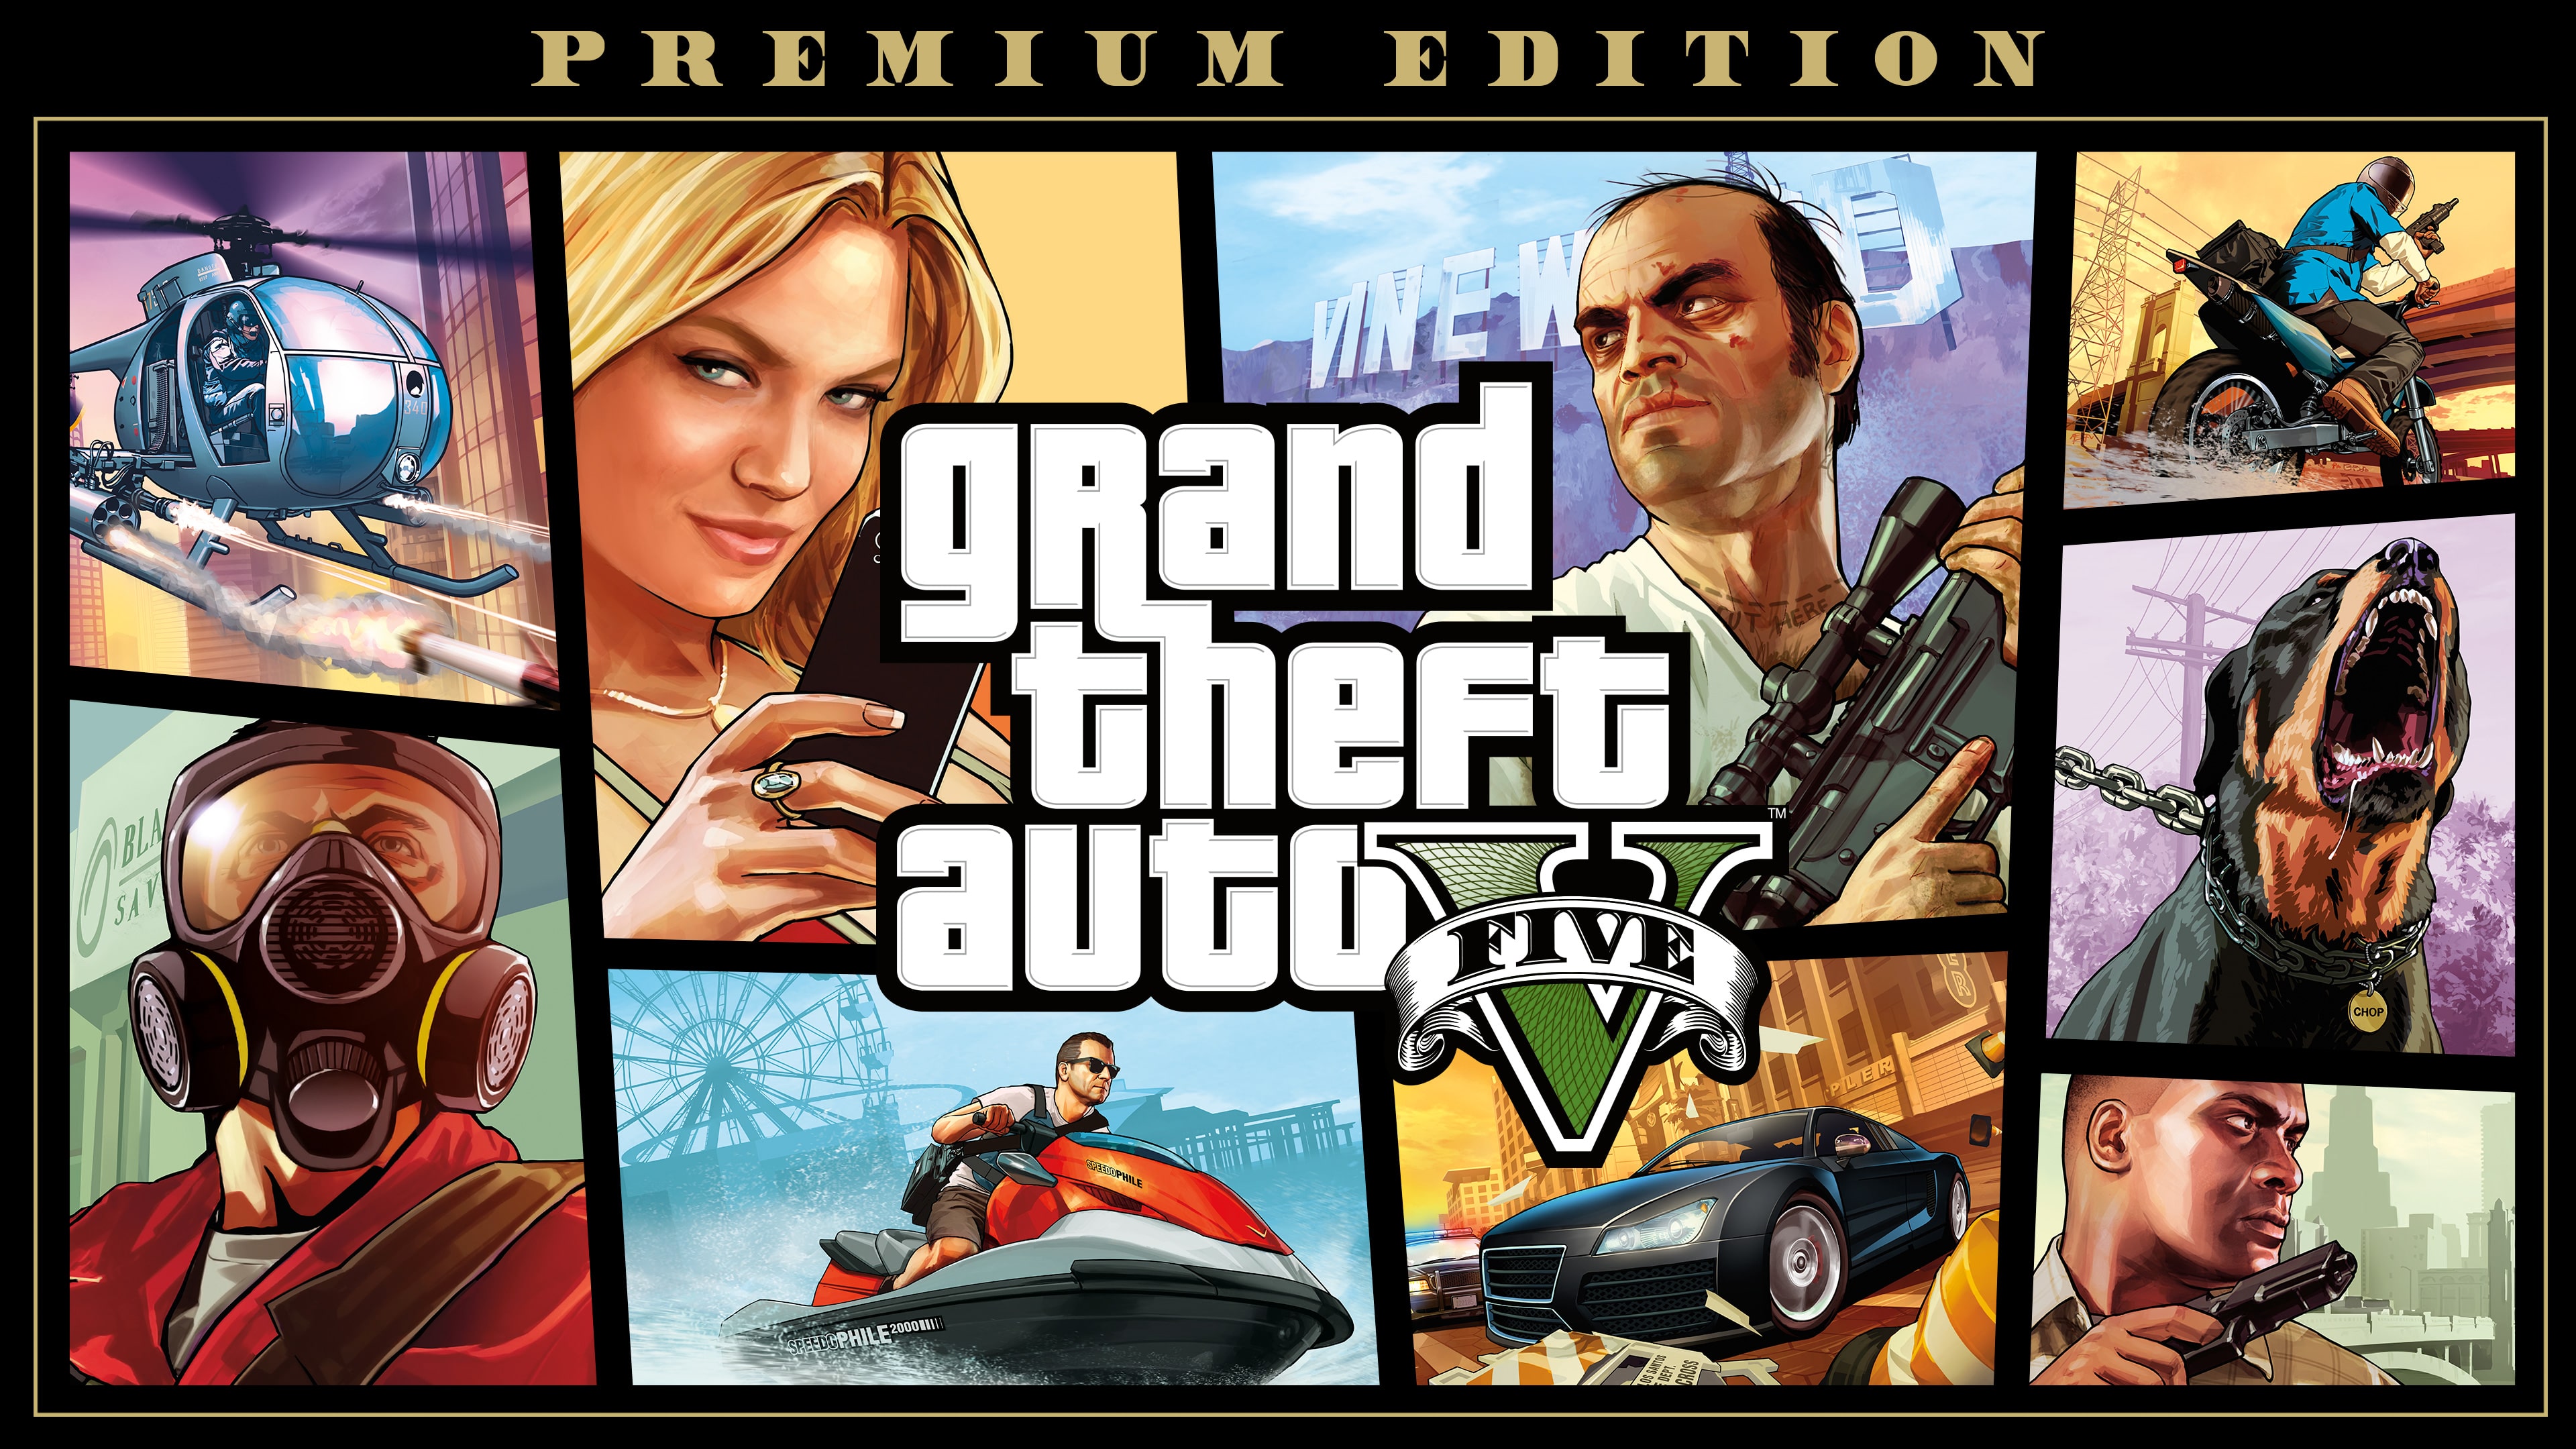 Grand Theft Auto V: Edycja Premium